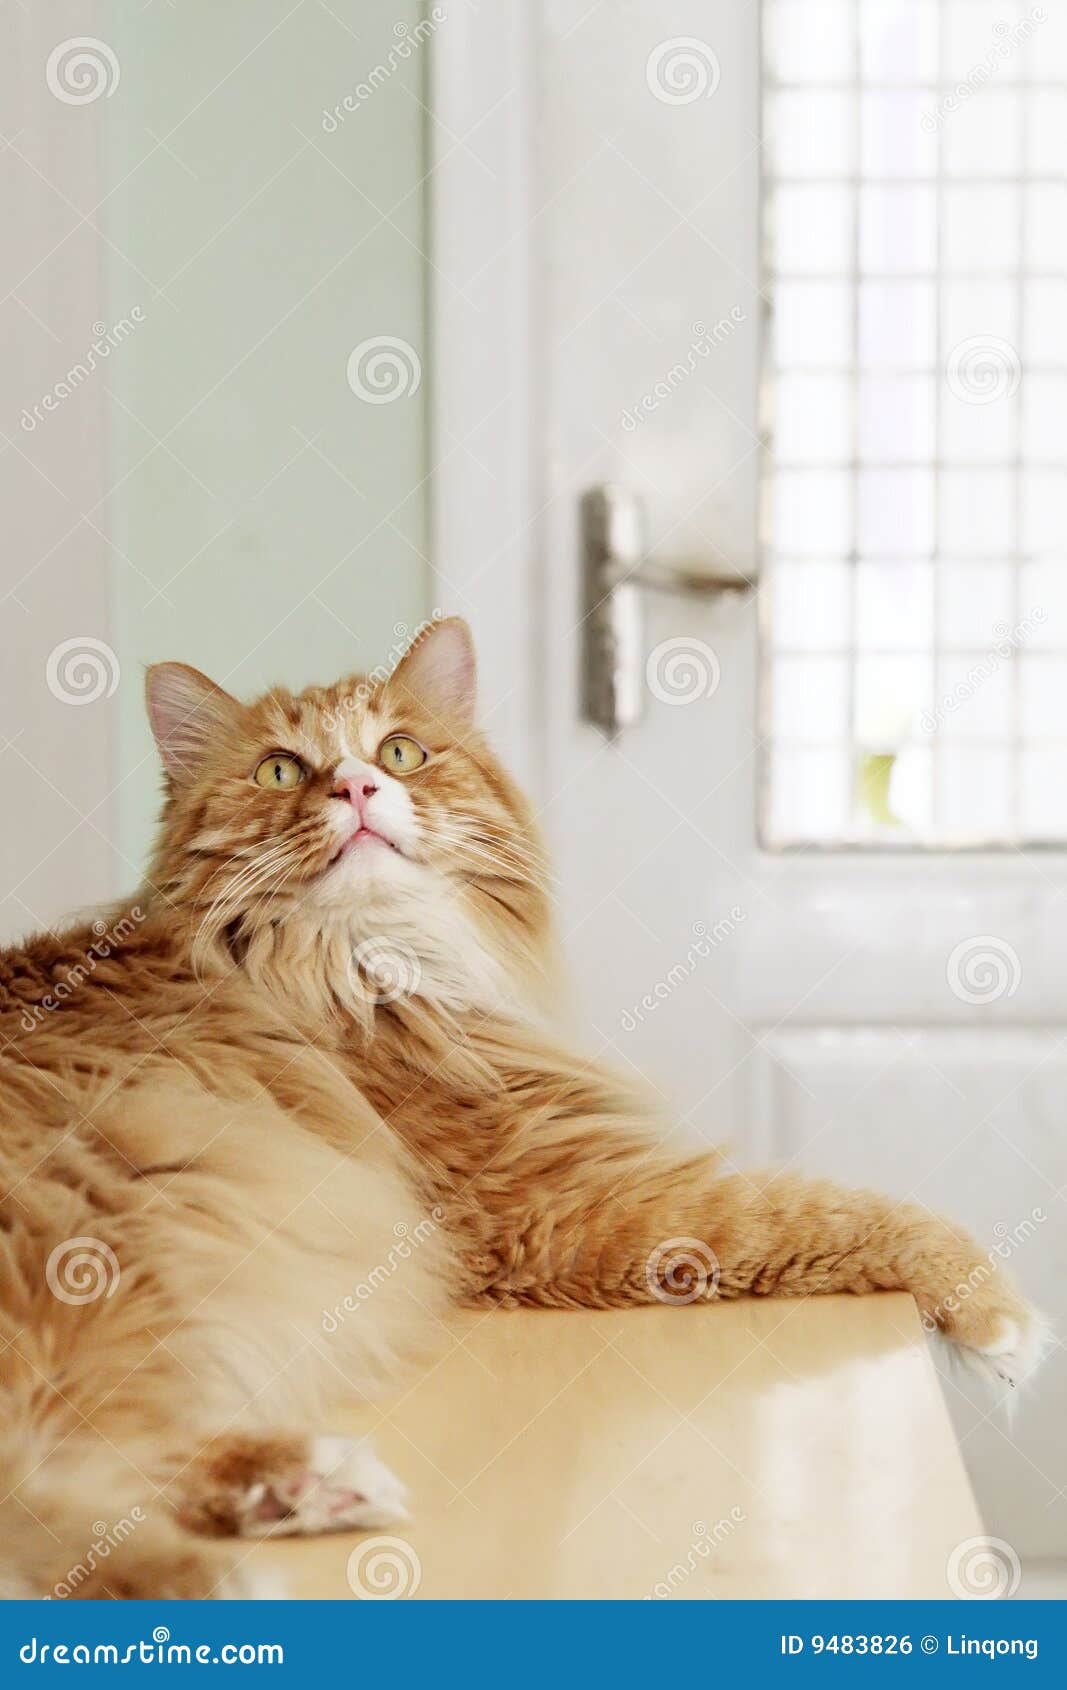 Cute yellow cat stock photo. Image of domestic, animal - 9483826